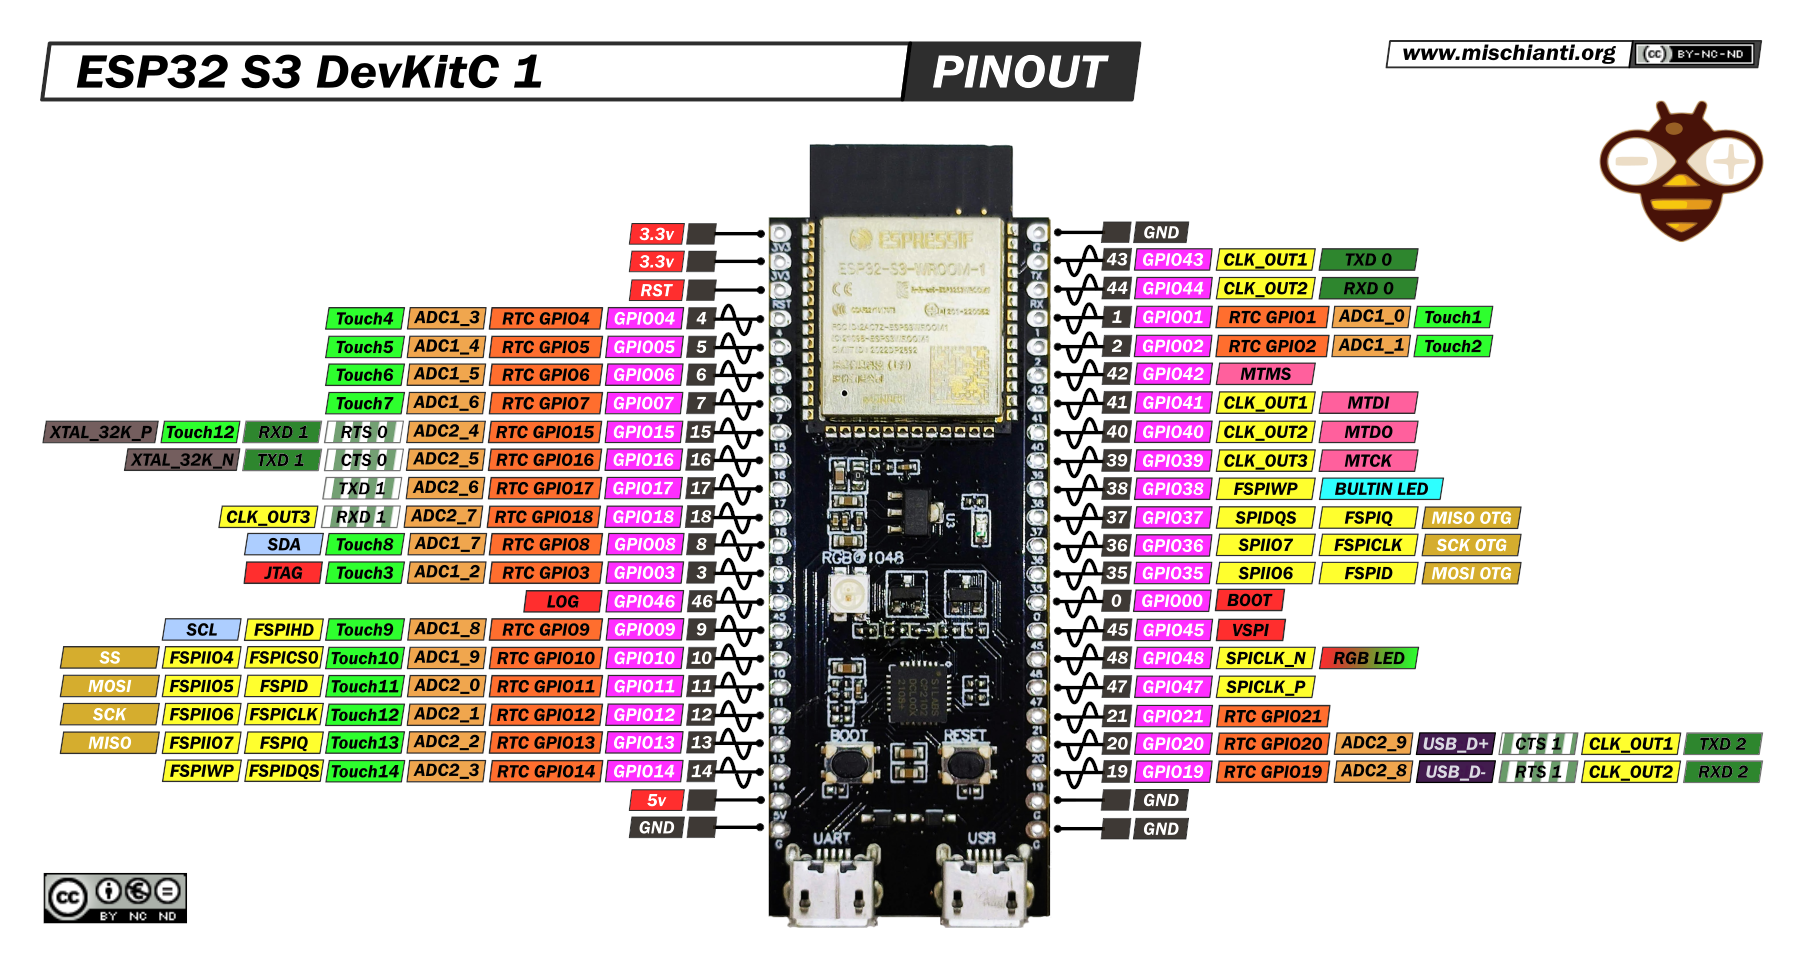 ESP32 S3 DevKitC 1: high-resolution pinout and specs – Renzo